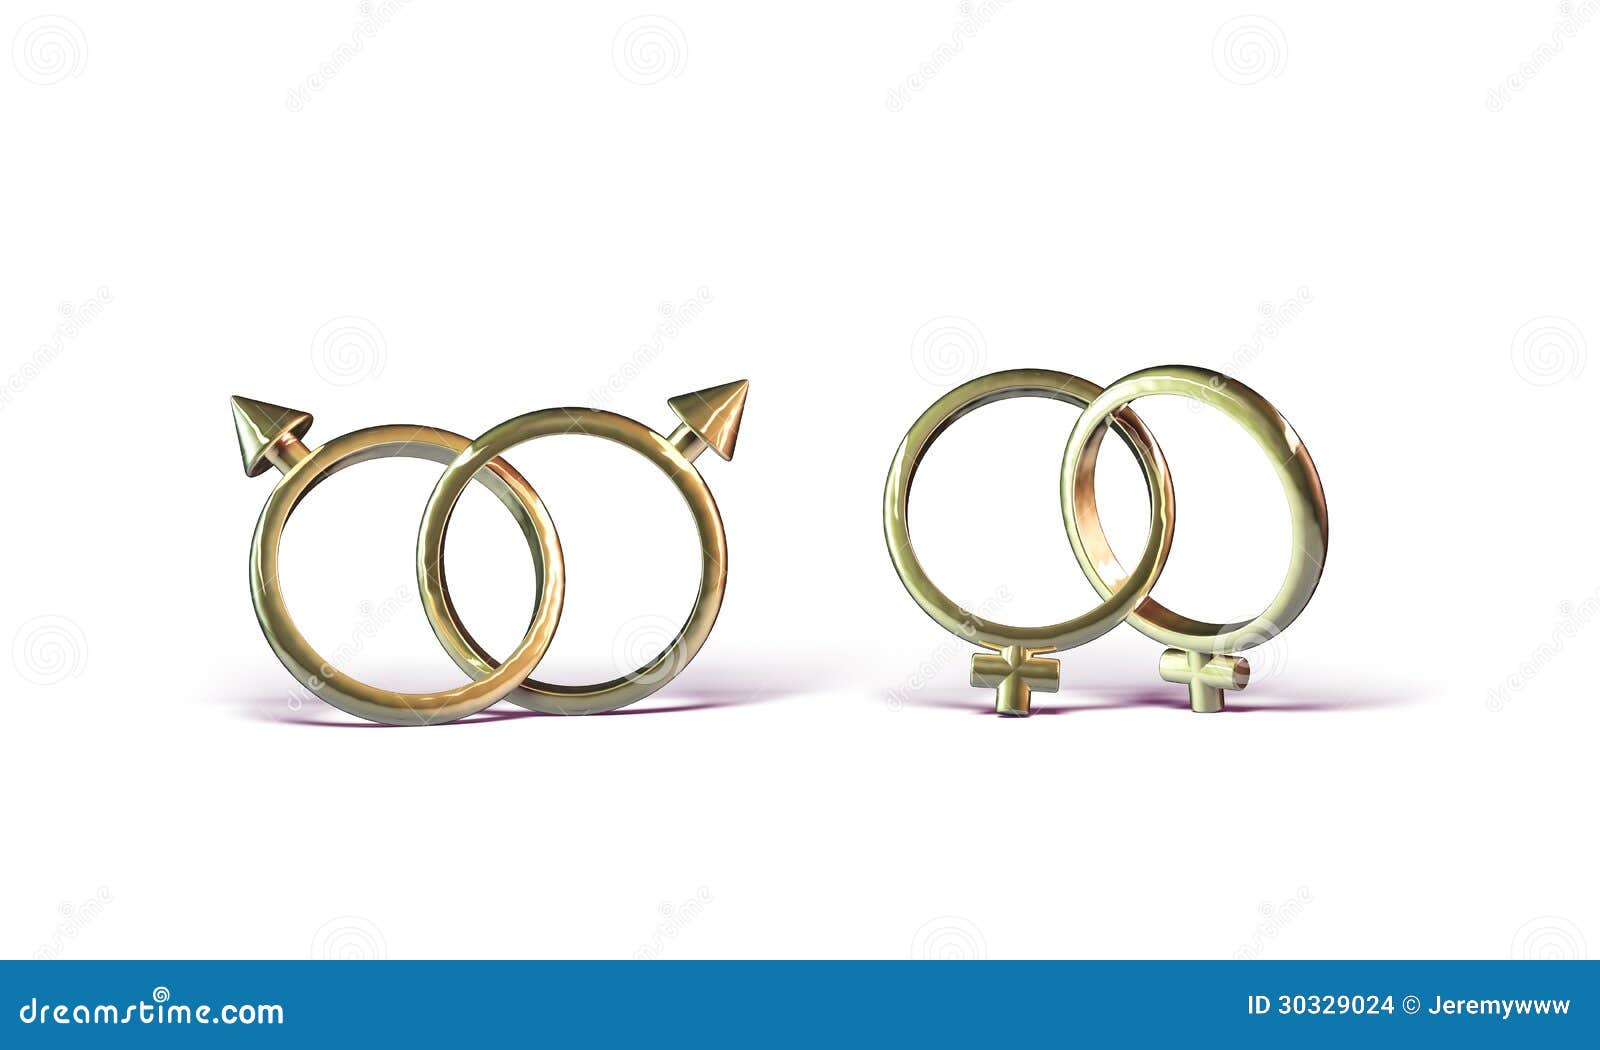 Two sets of interlocking wedding rings, suggesting gay marriage. White ...